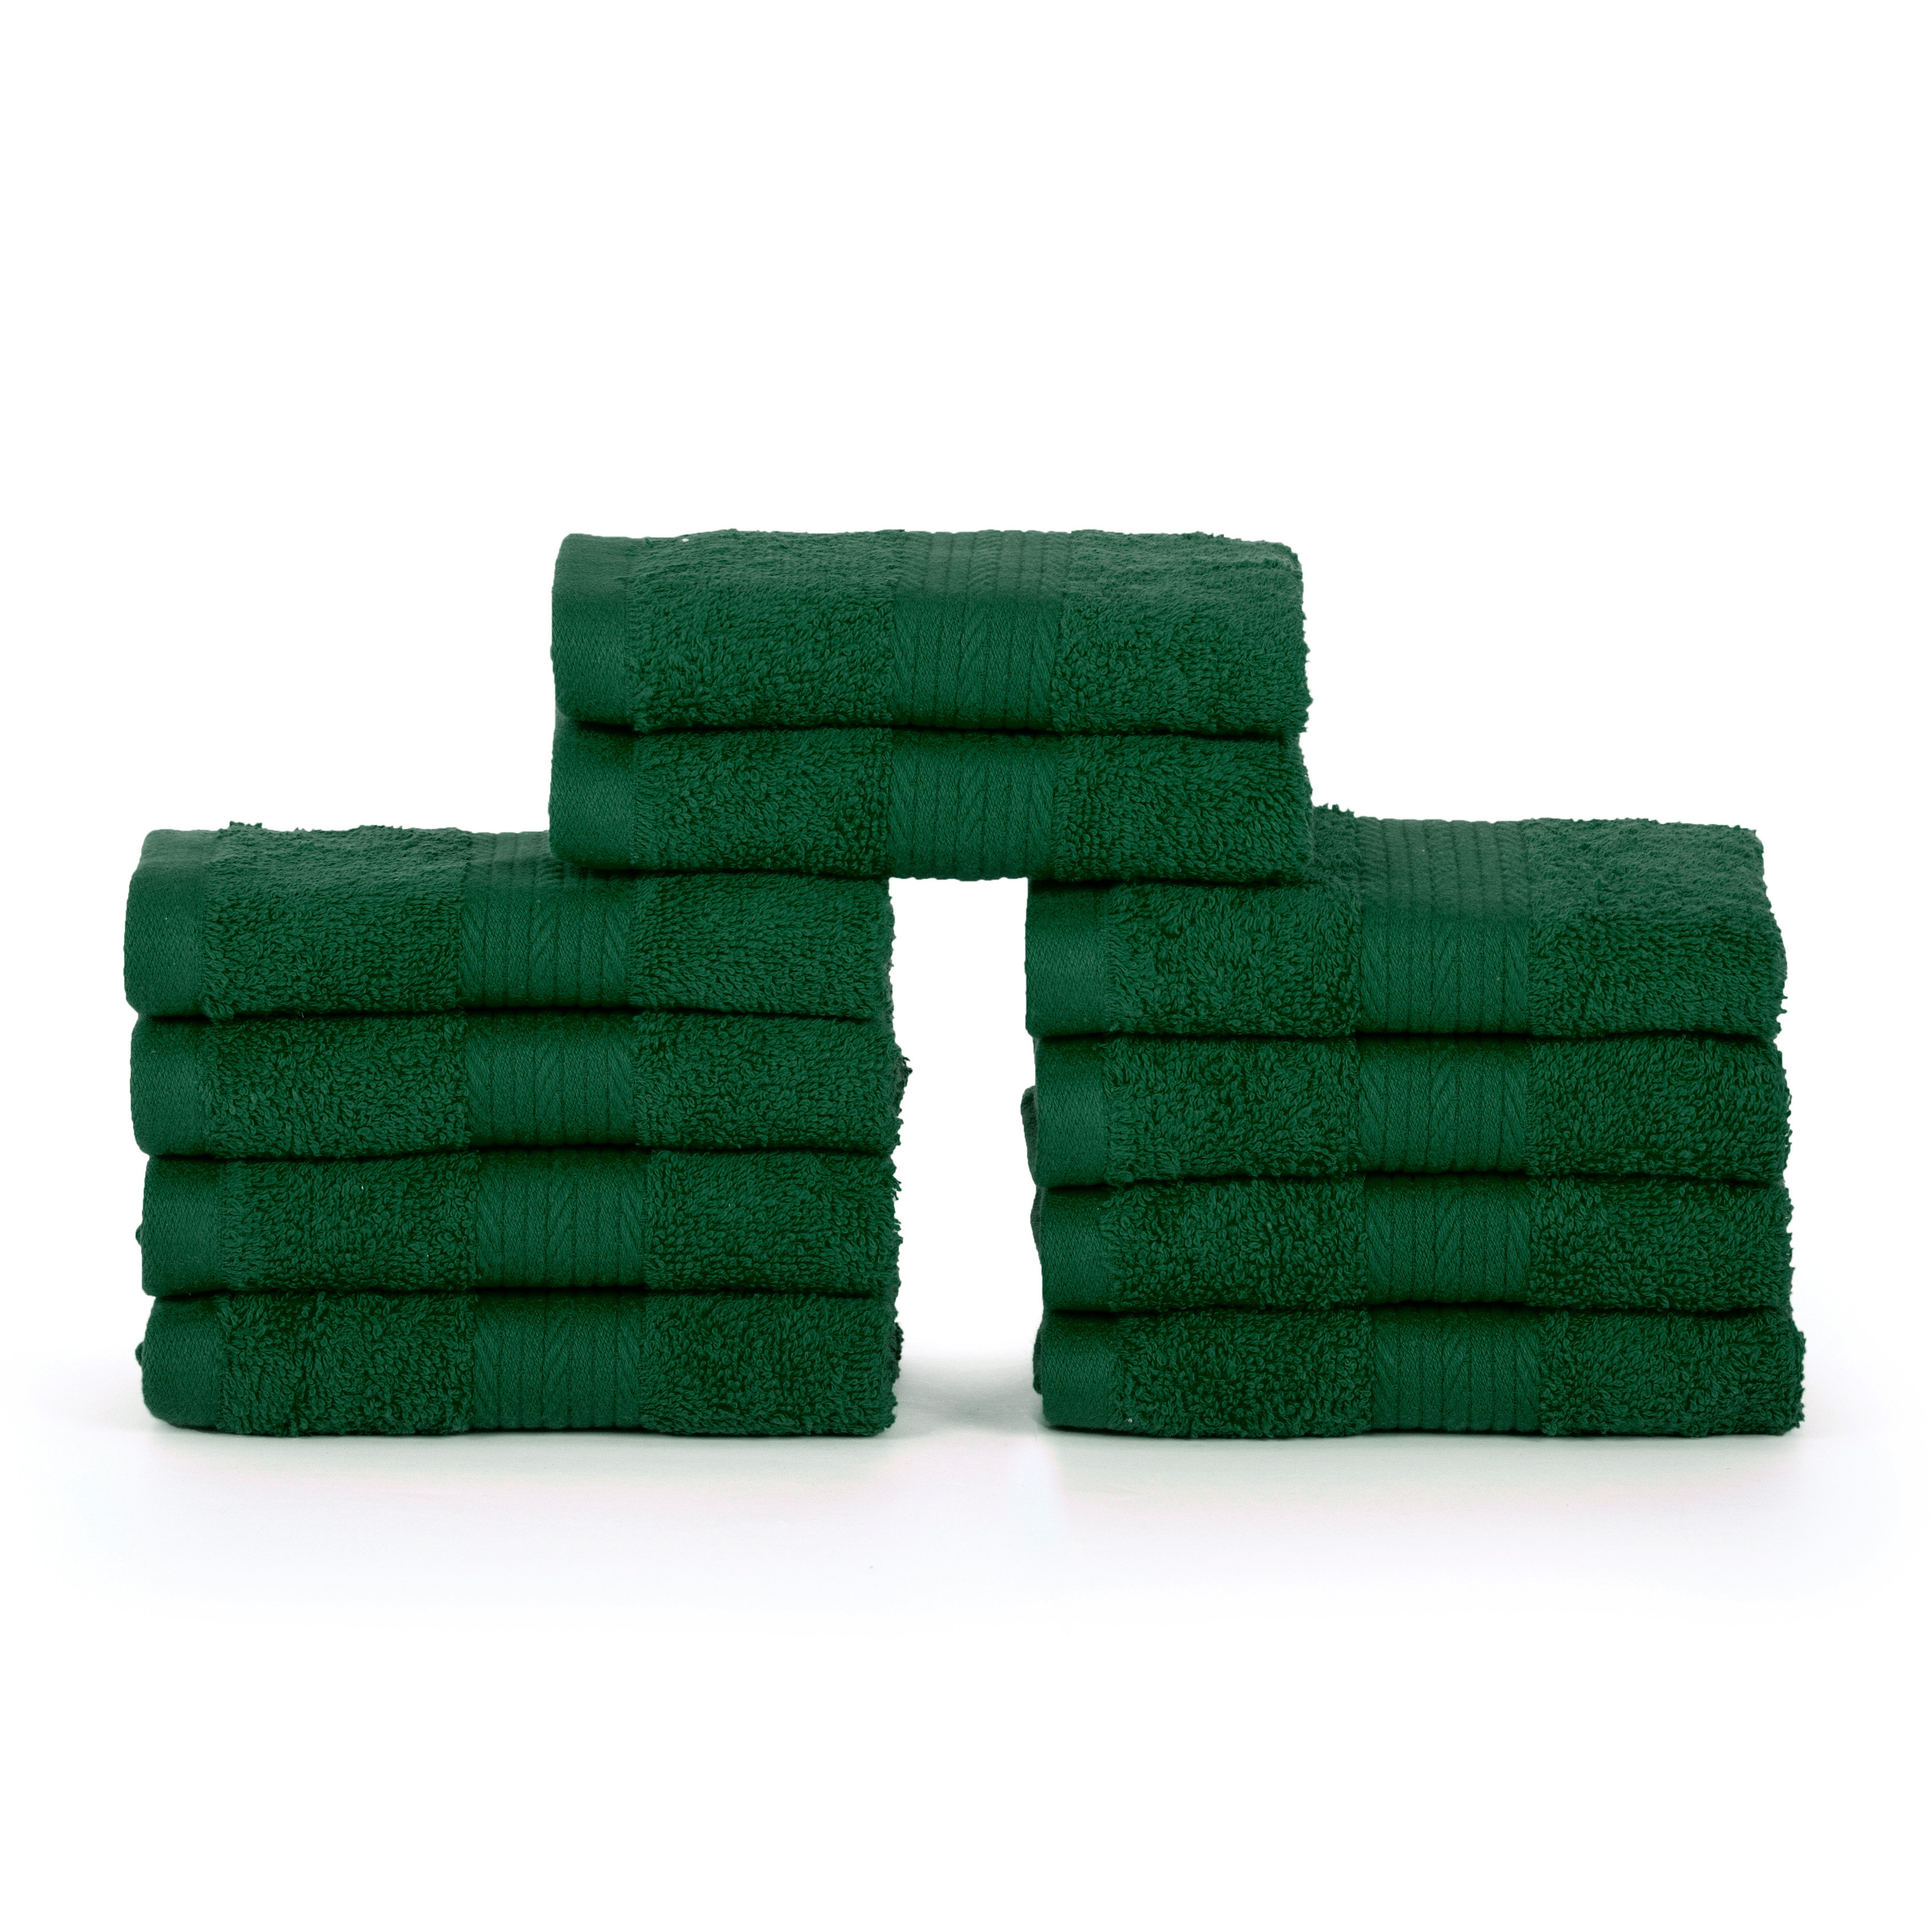 80 Pcs Bamboo Washcloths Towel Bulk 10 x 10 Inch White Washcloths